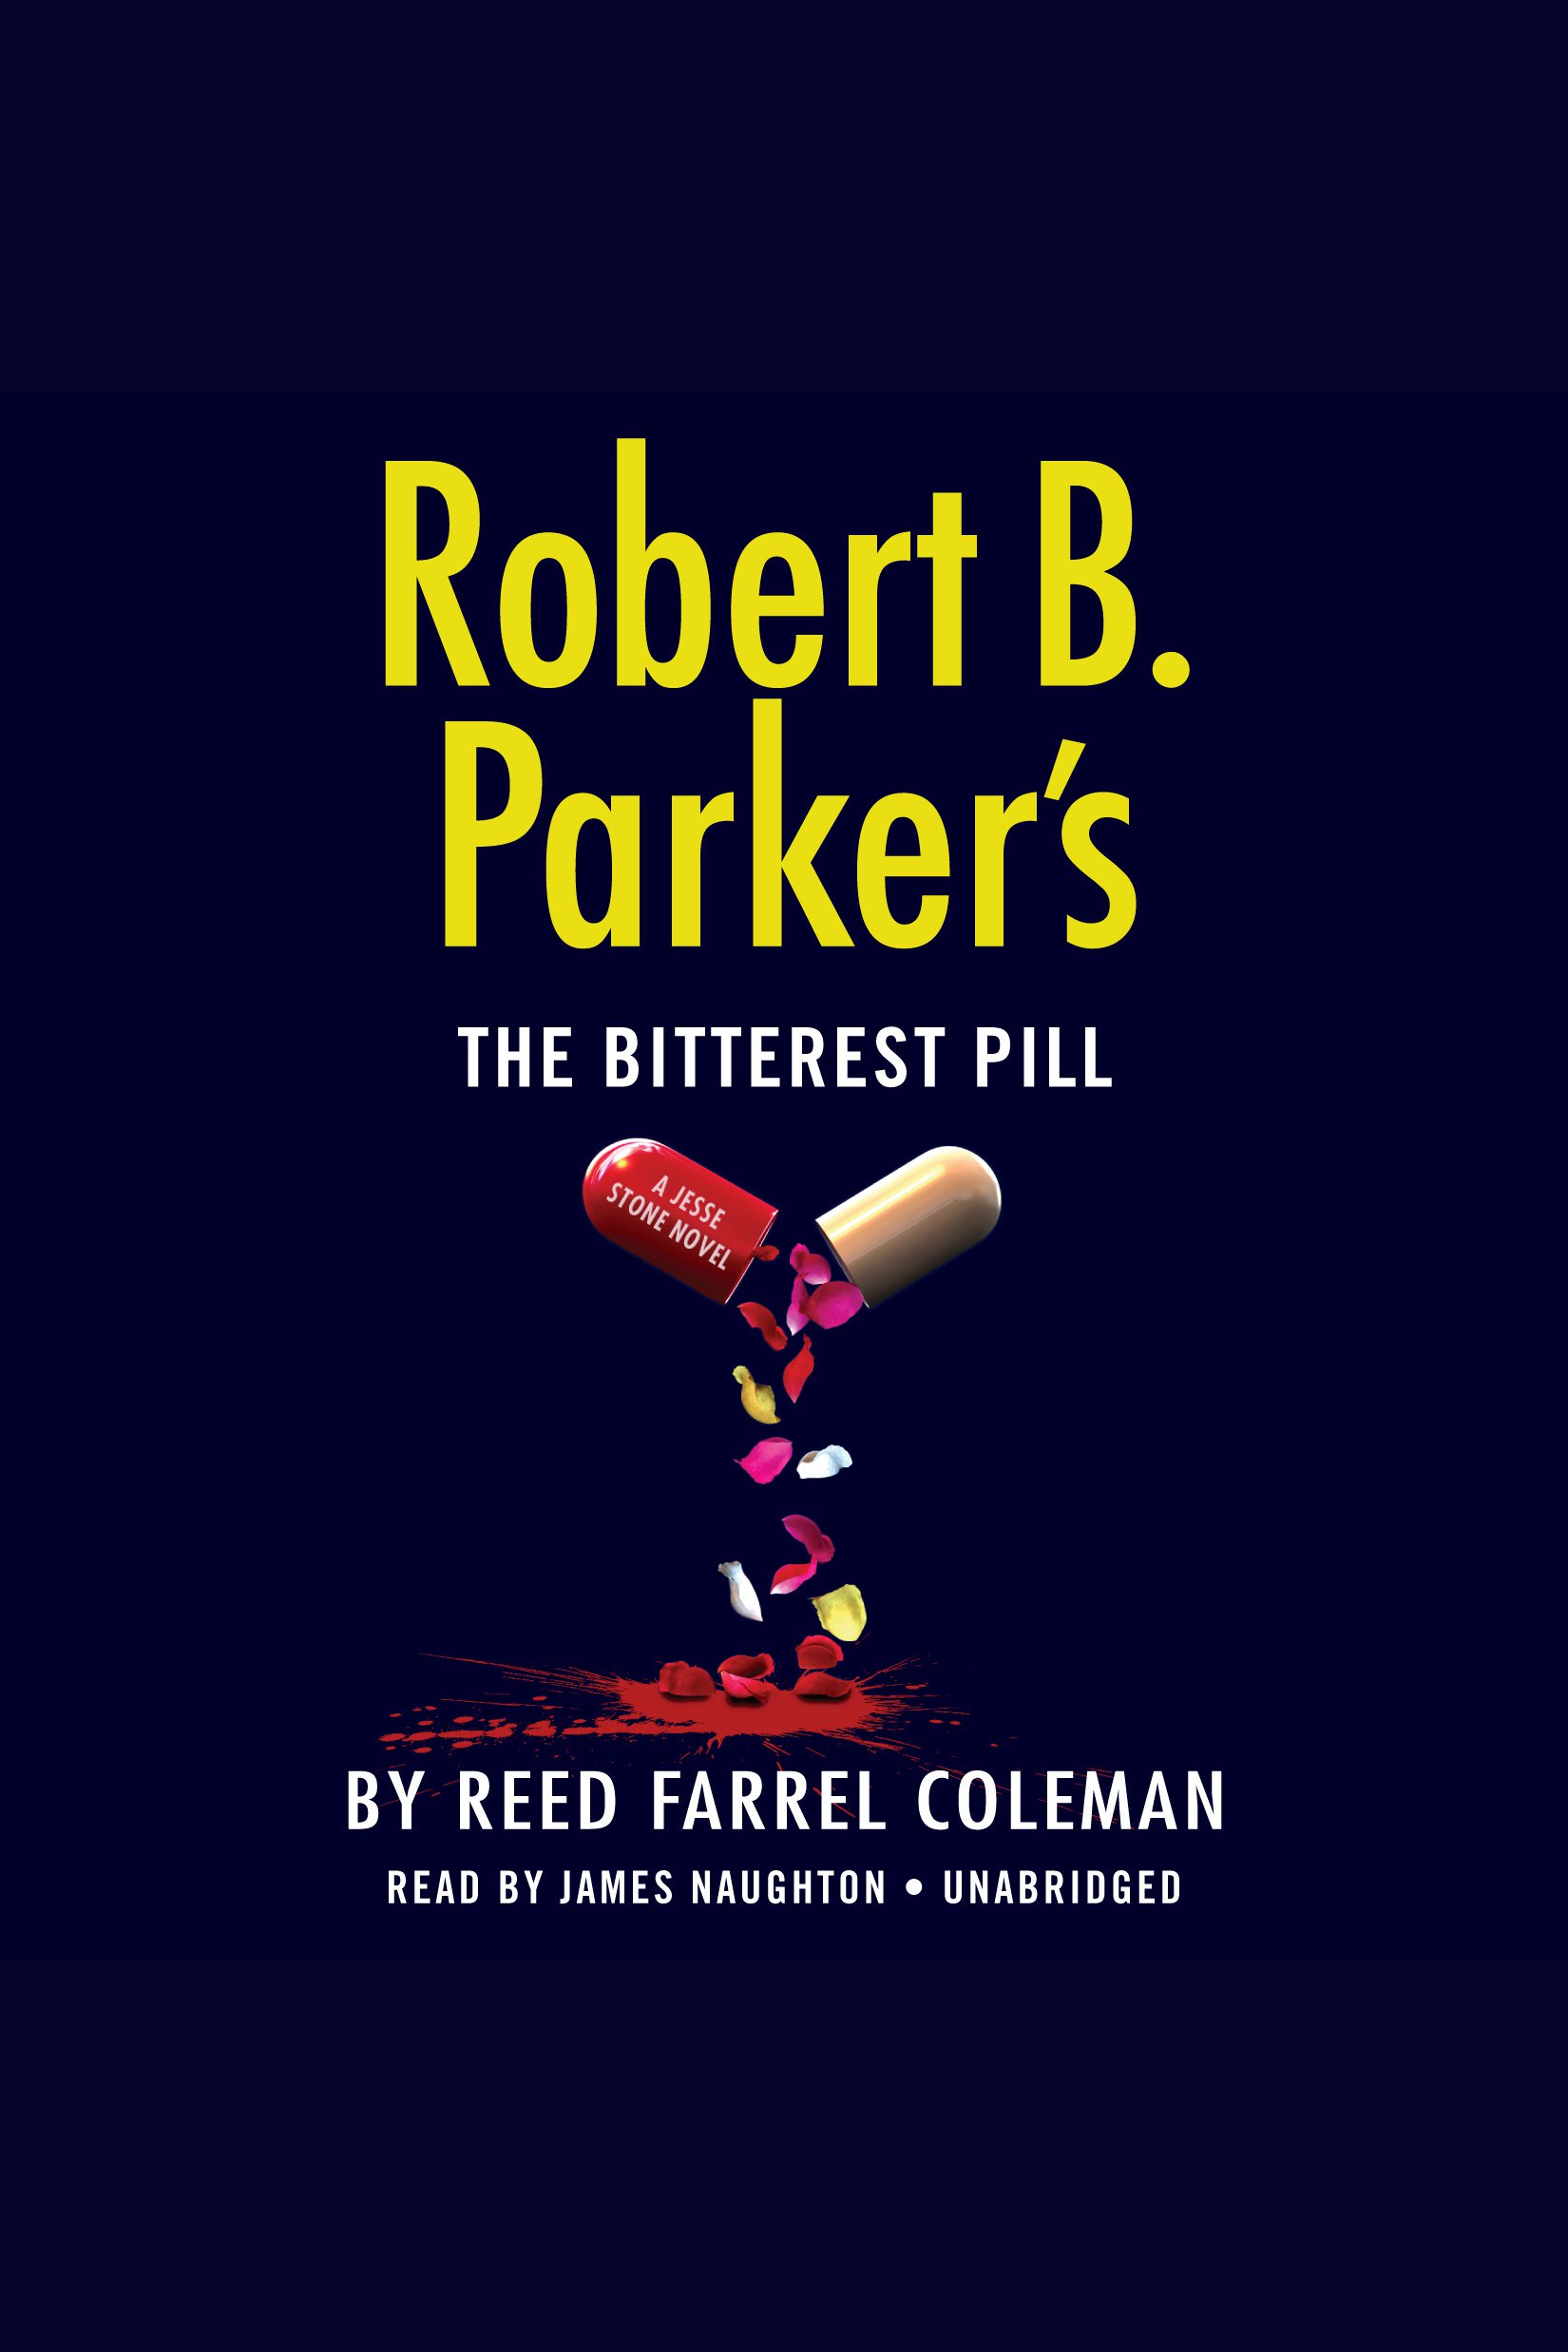 Robert B. Parker's the bitterest pill cover image